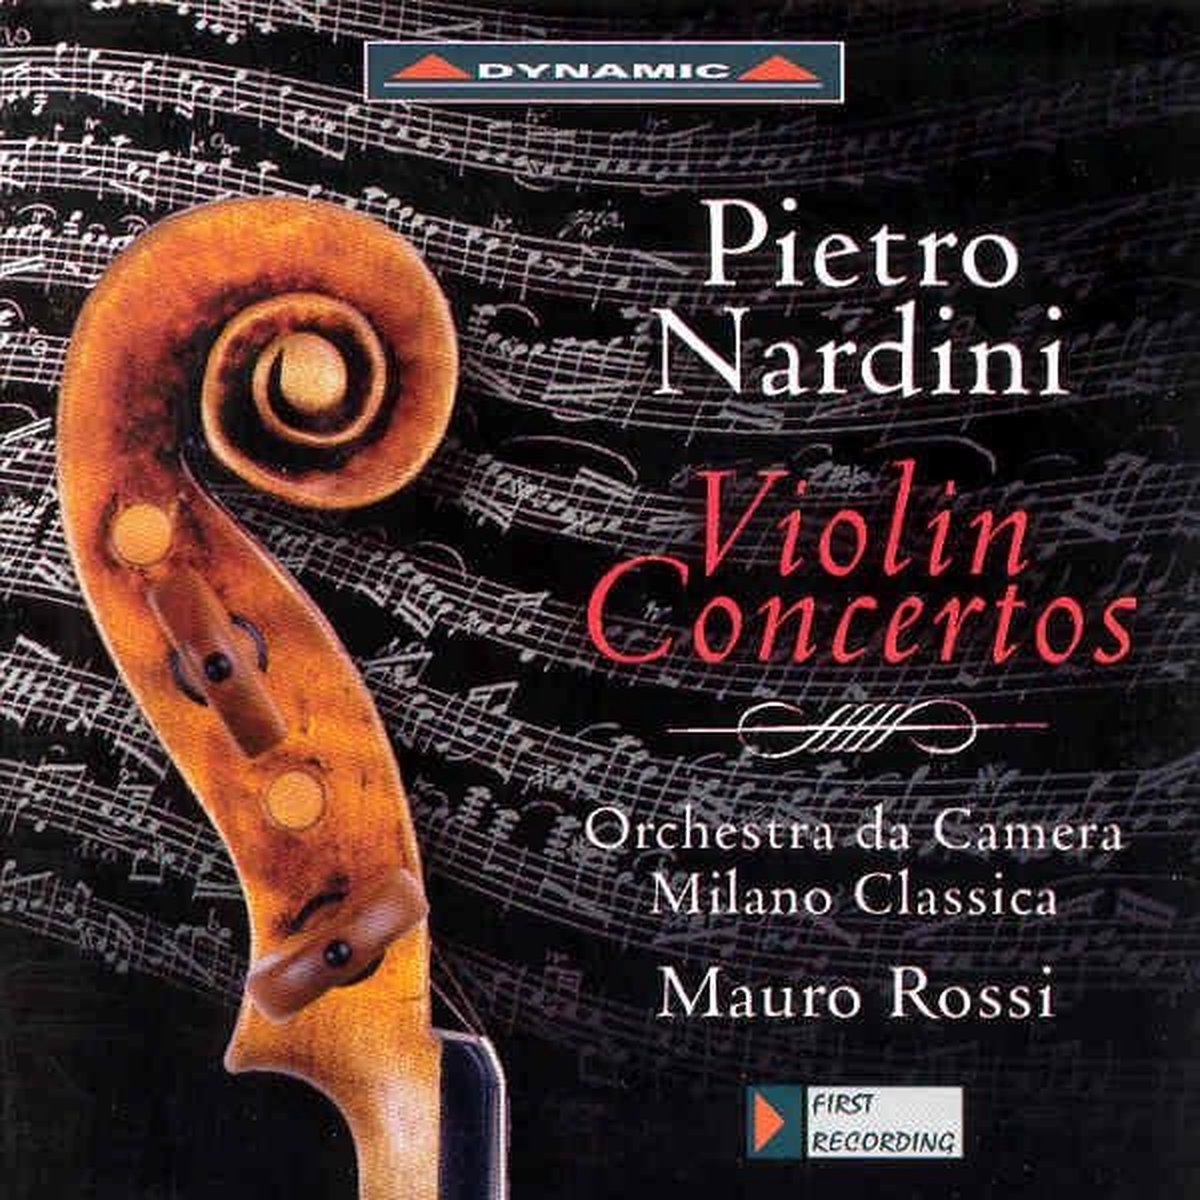 Various Artists - Nardini Viocon M.Rossi:Vi (CD) - various artists